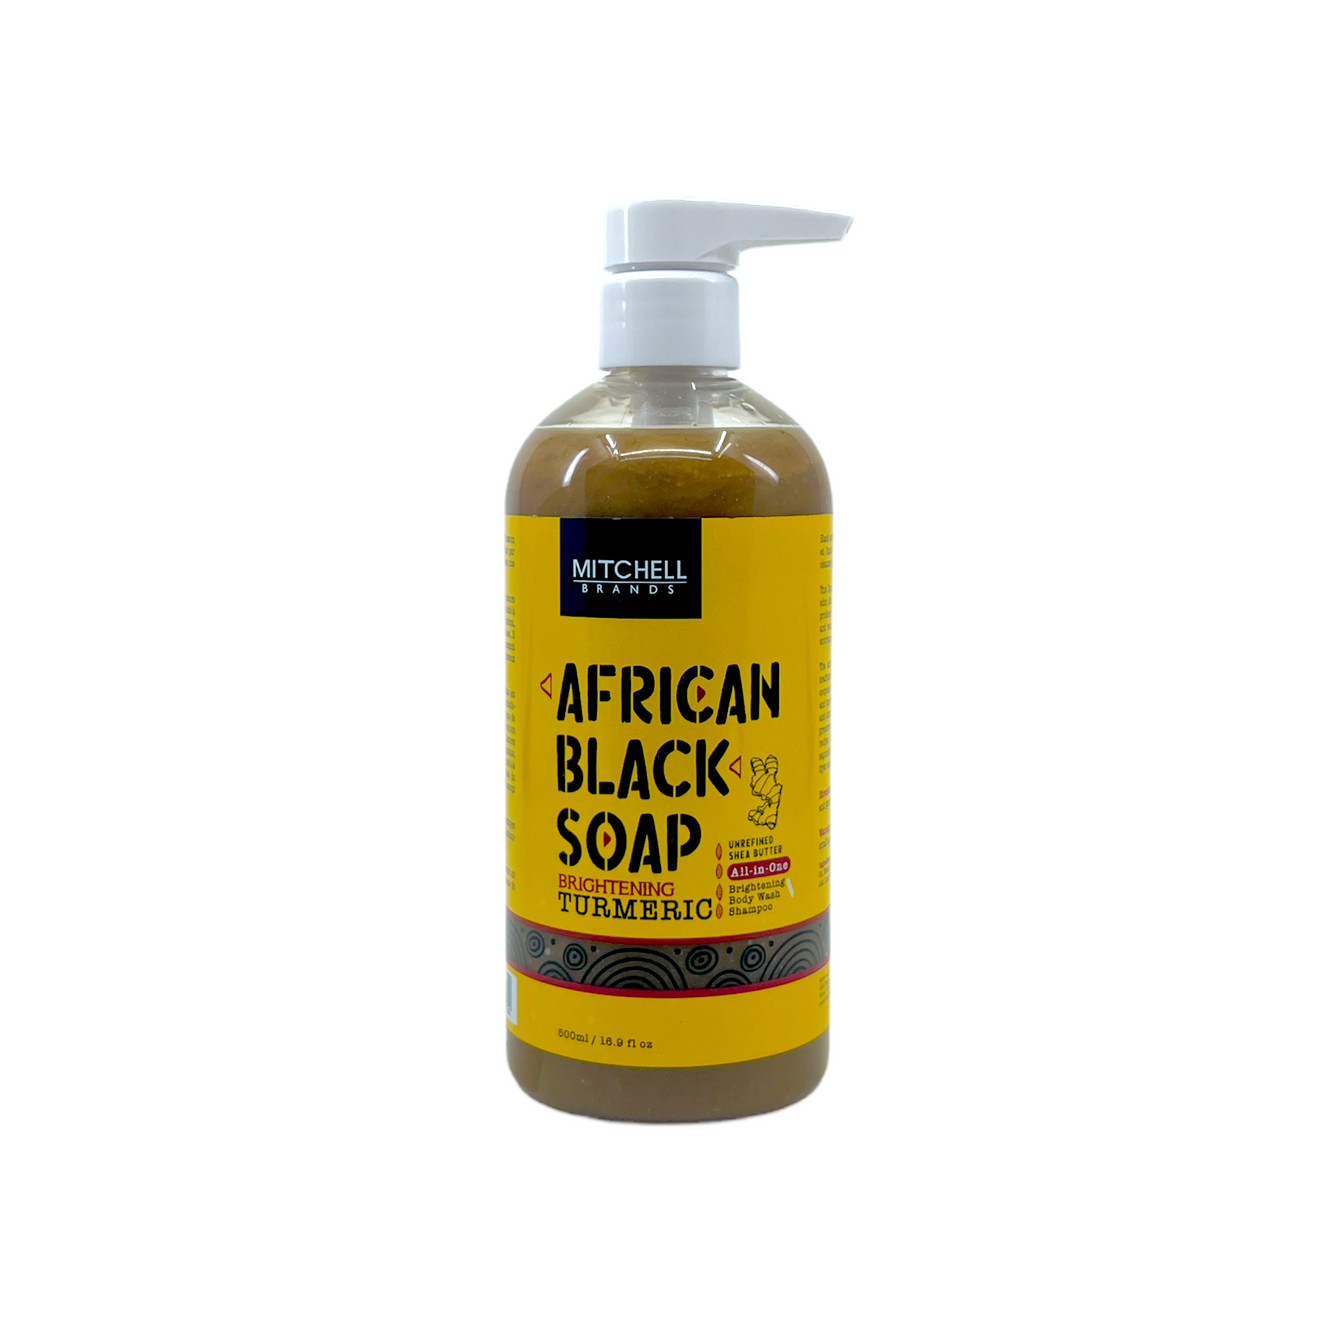 African Liquid Black Soap with Tumeric 500 ml (New) Mitchell Brands - Mitchell Brands - Skin Lightening, Skin Brightening, Fade Dark Spots, Shea Butter, Hair Growth Products